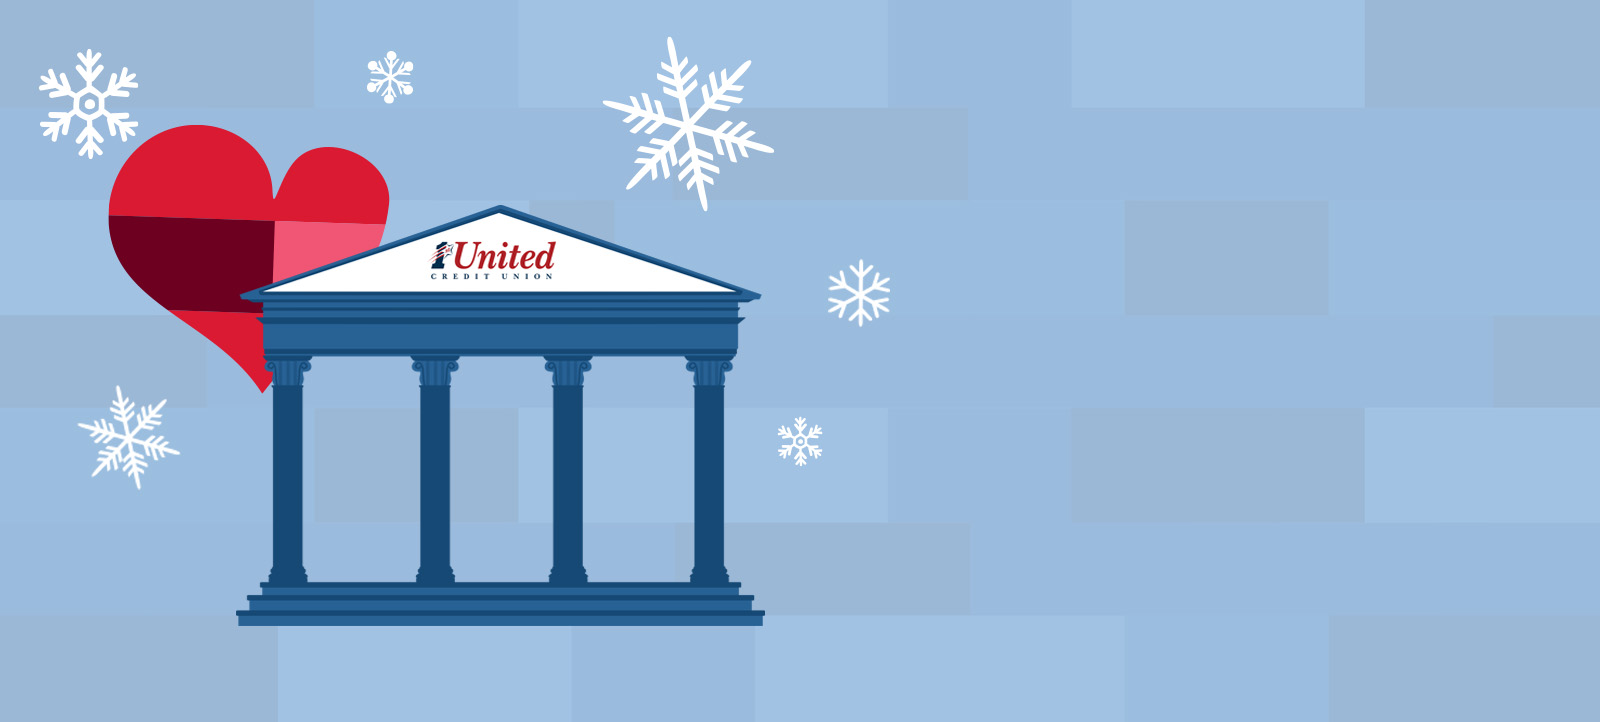 1st United Credit Union